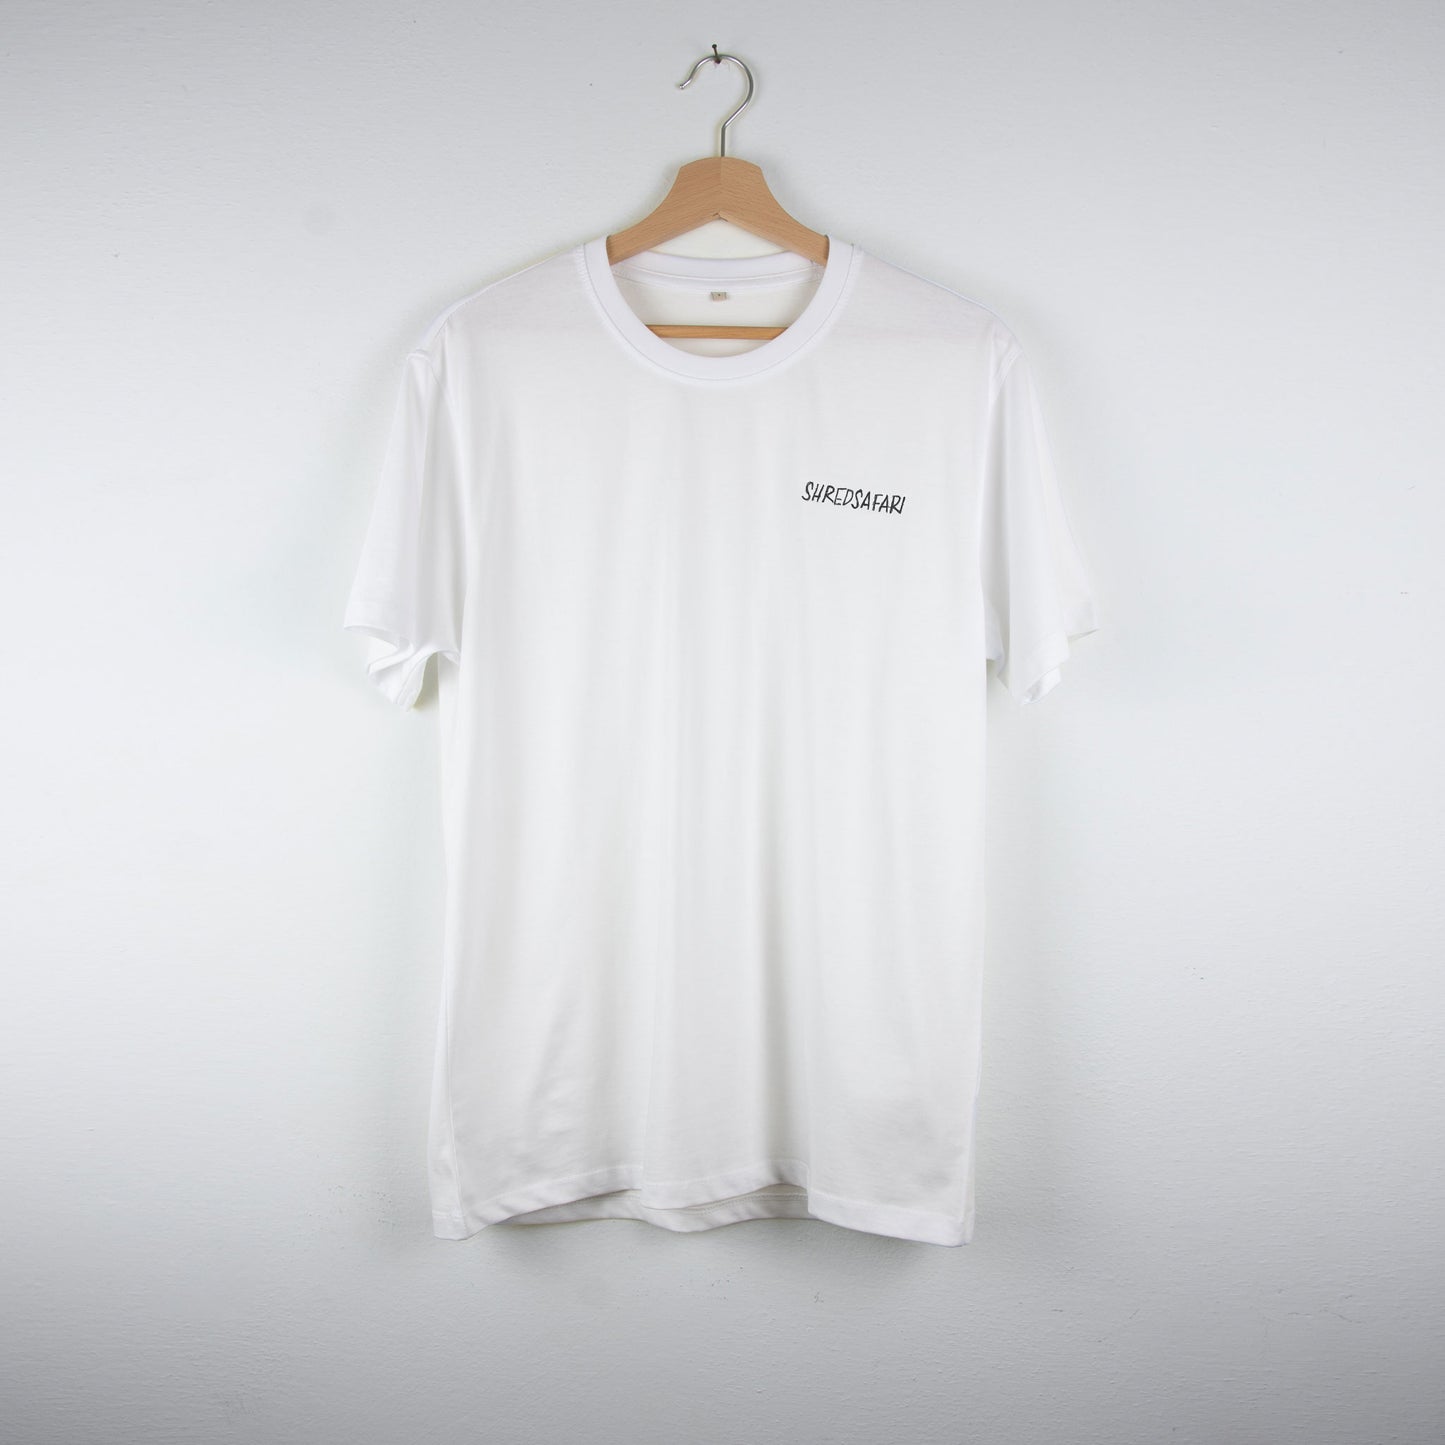 SHREDSAFARI Basic Contrast T-Shirt Unisex, White